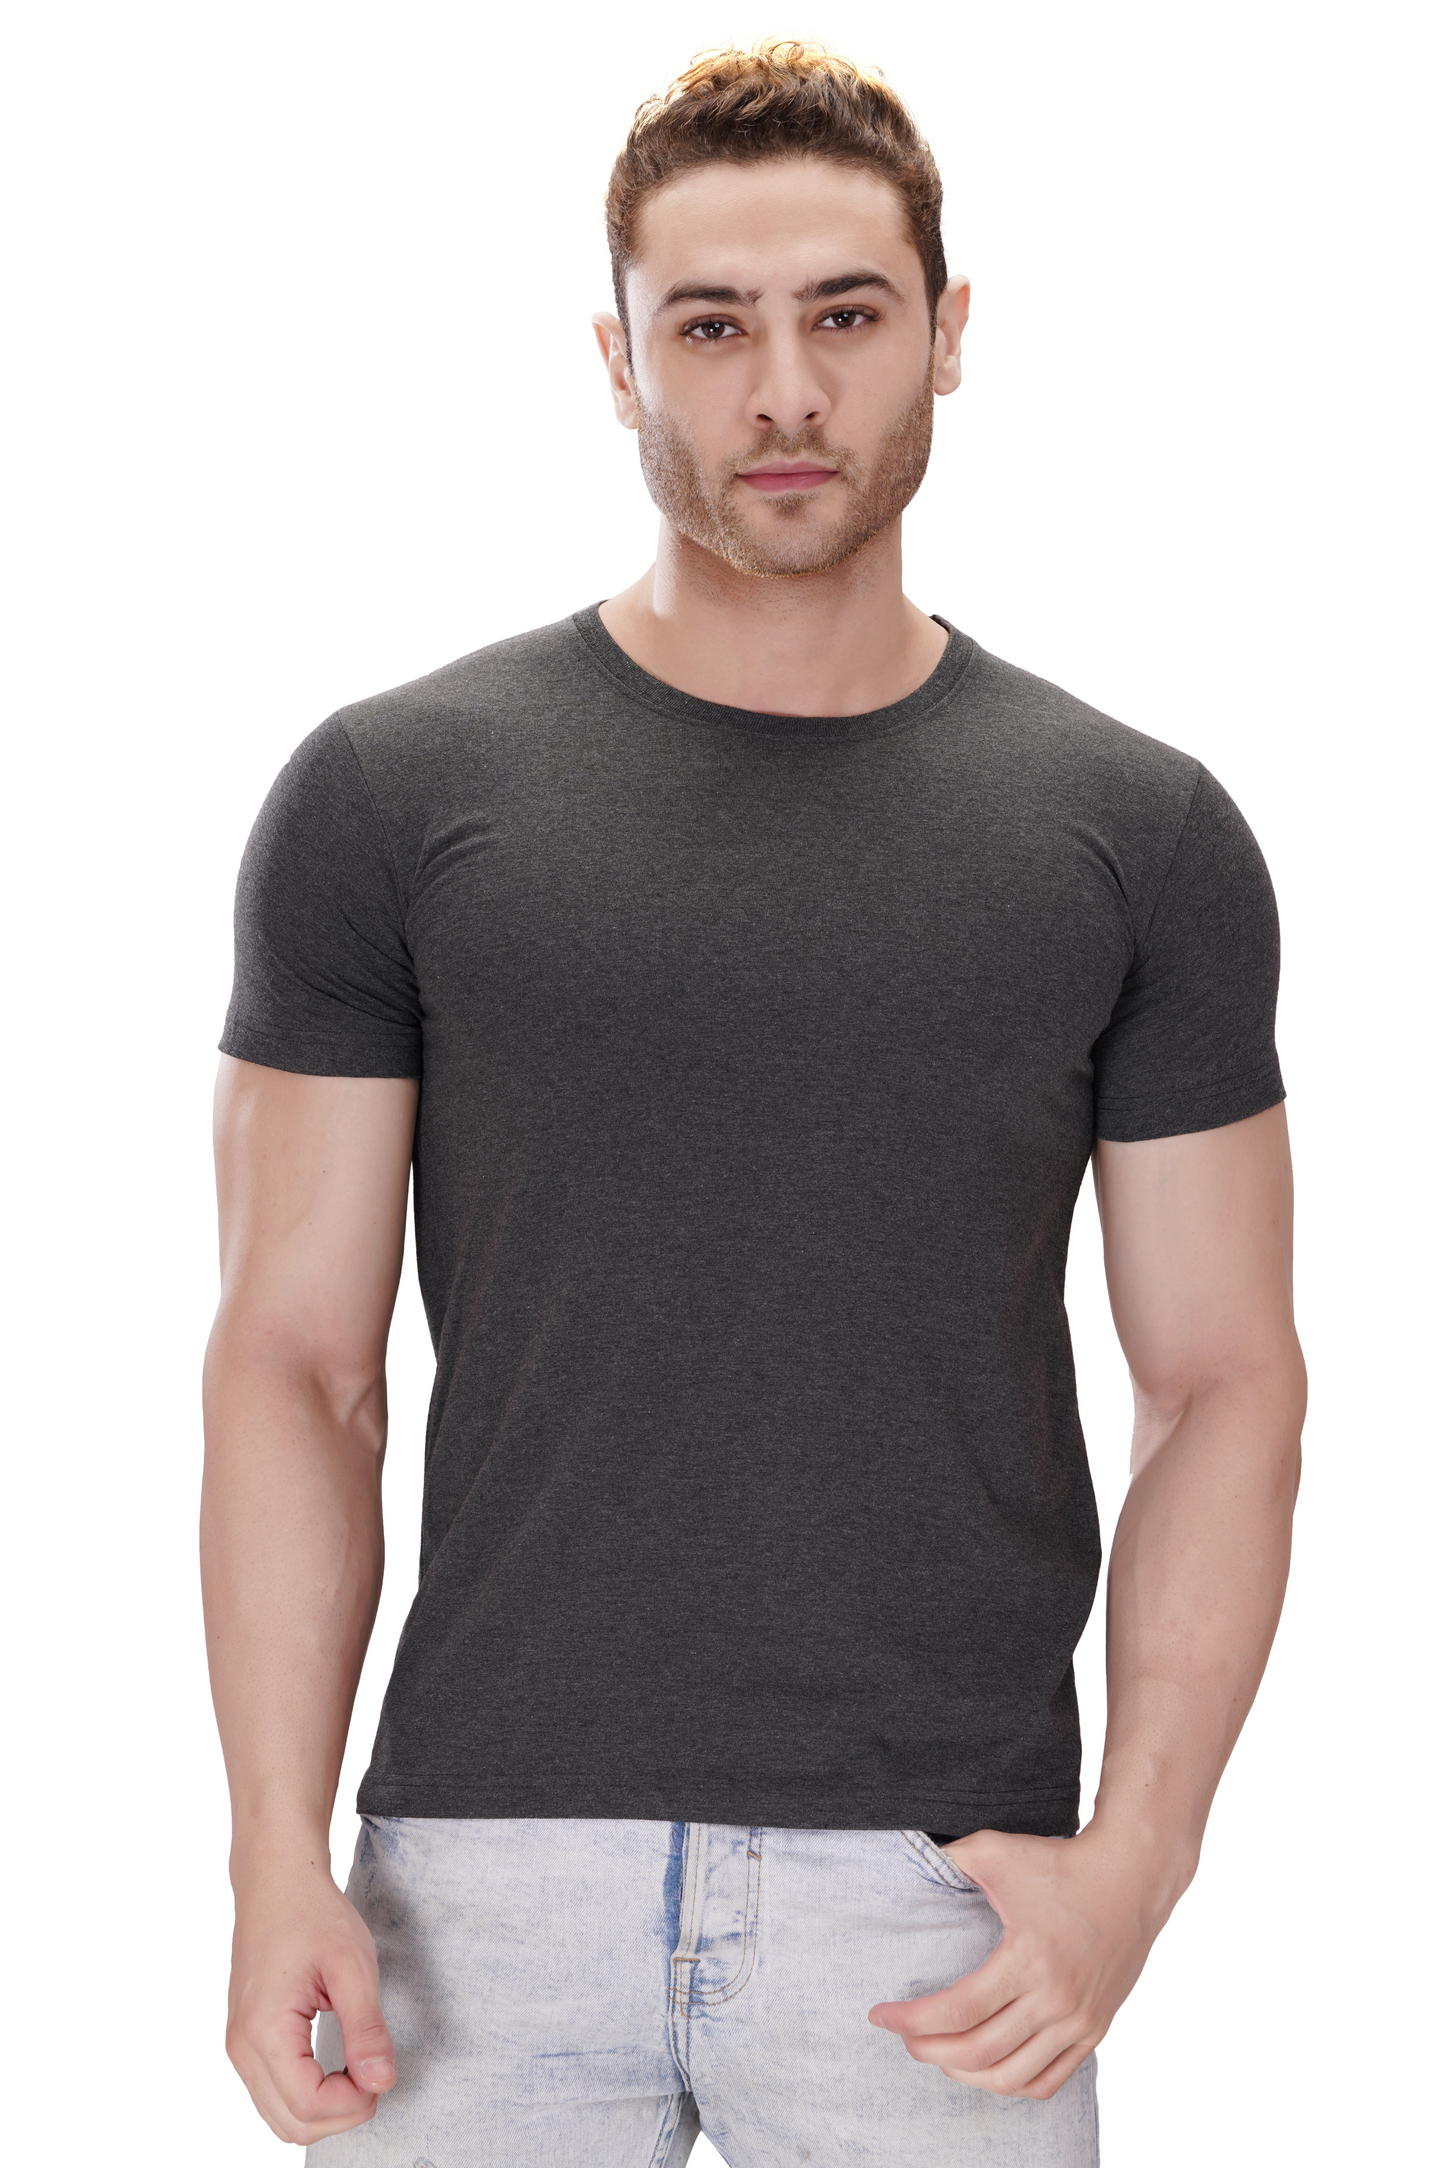 100% Cotton Men’s Half Sleeve T-Shirt - Charcoal Melange